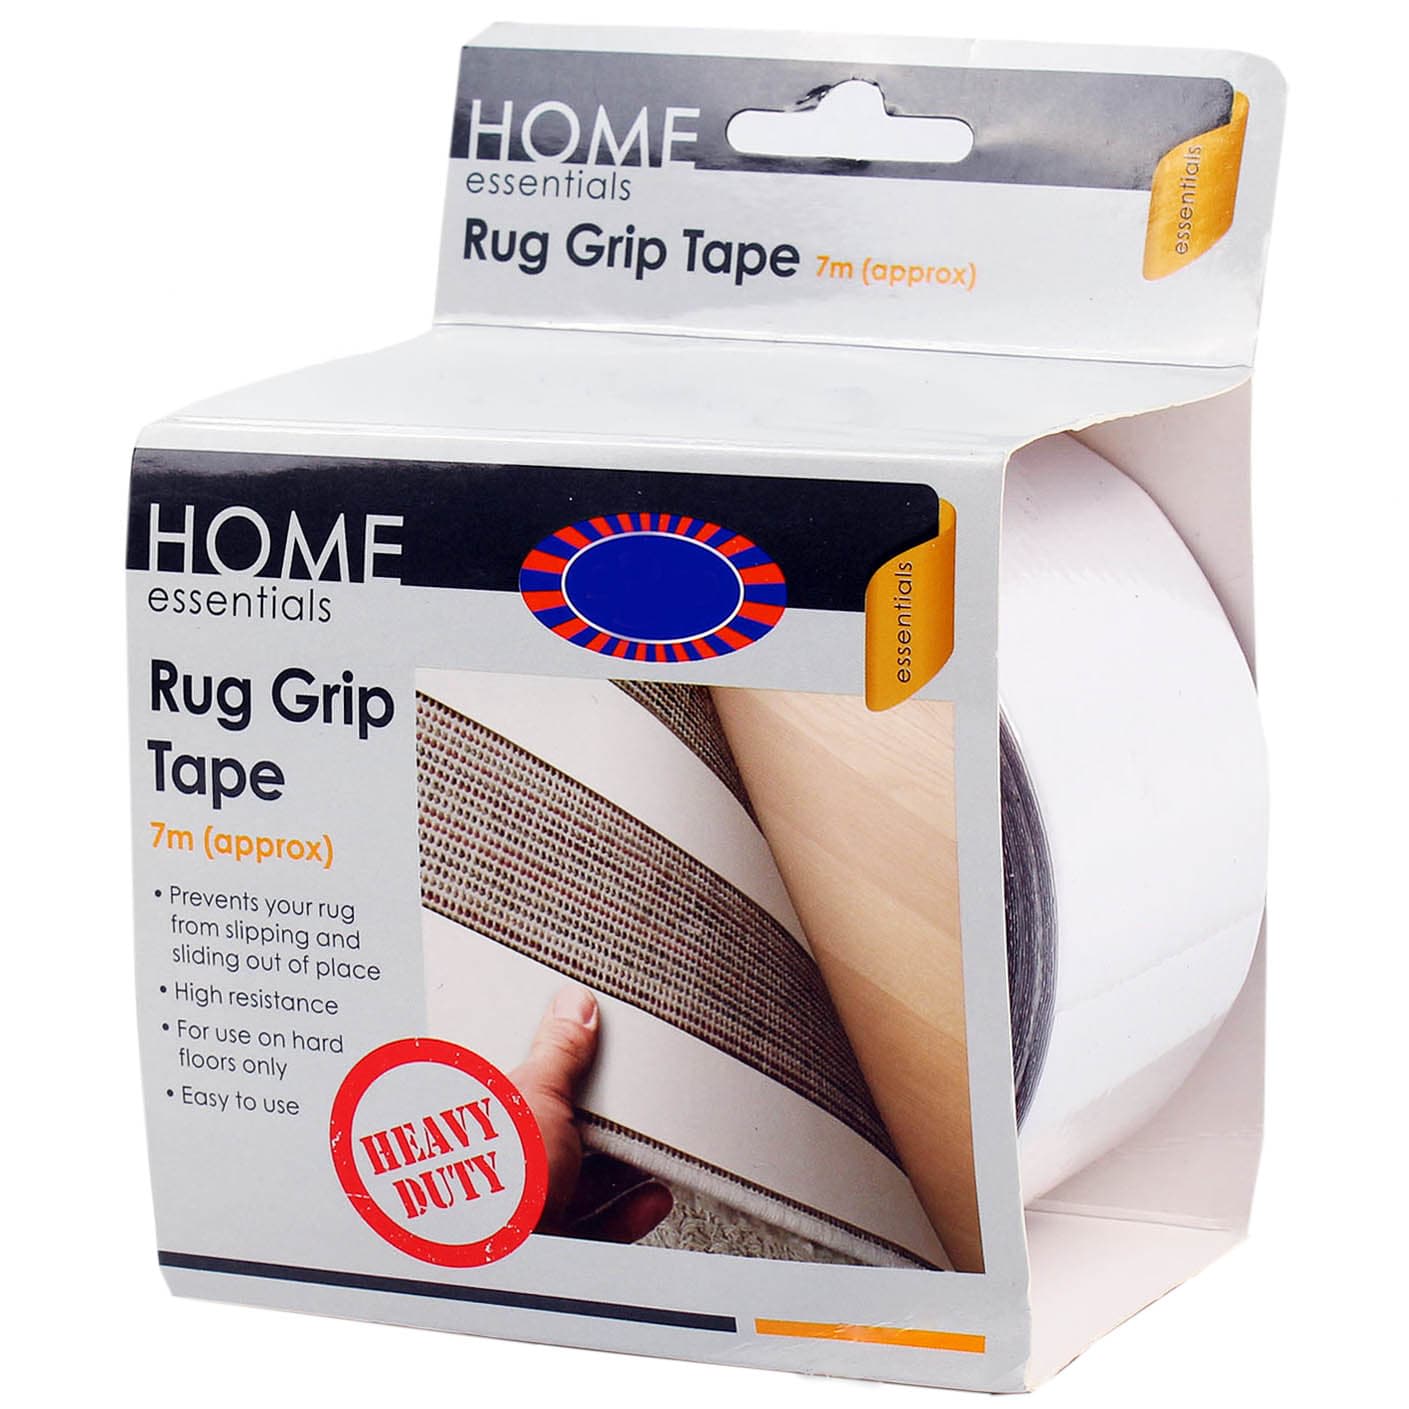 Home Essentials Rug Grip Tape 7m